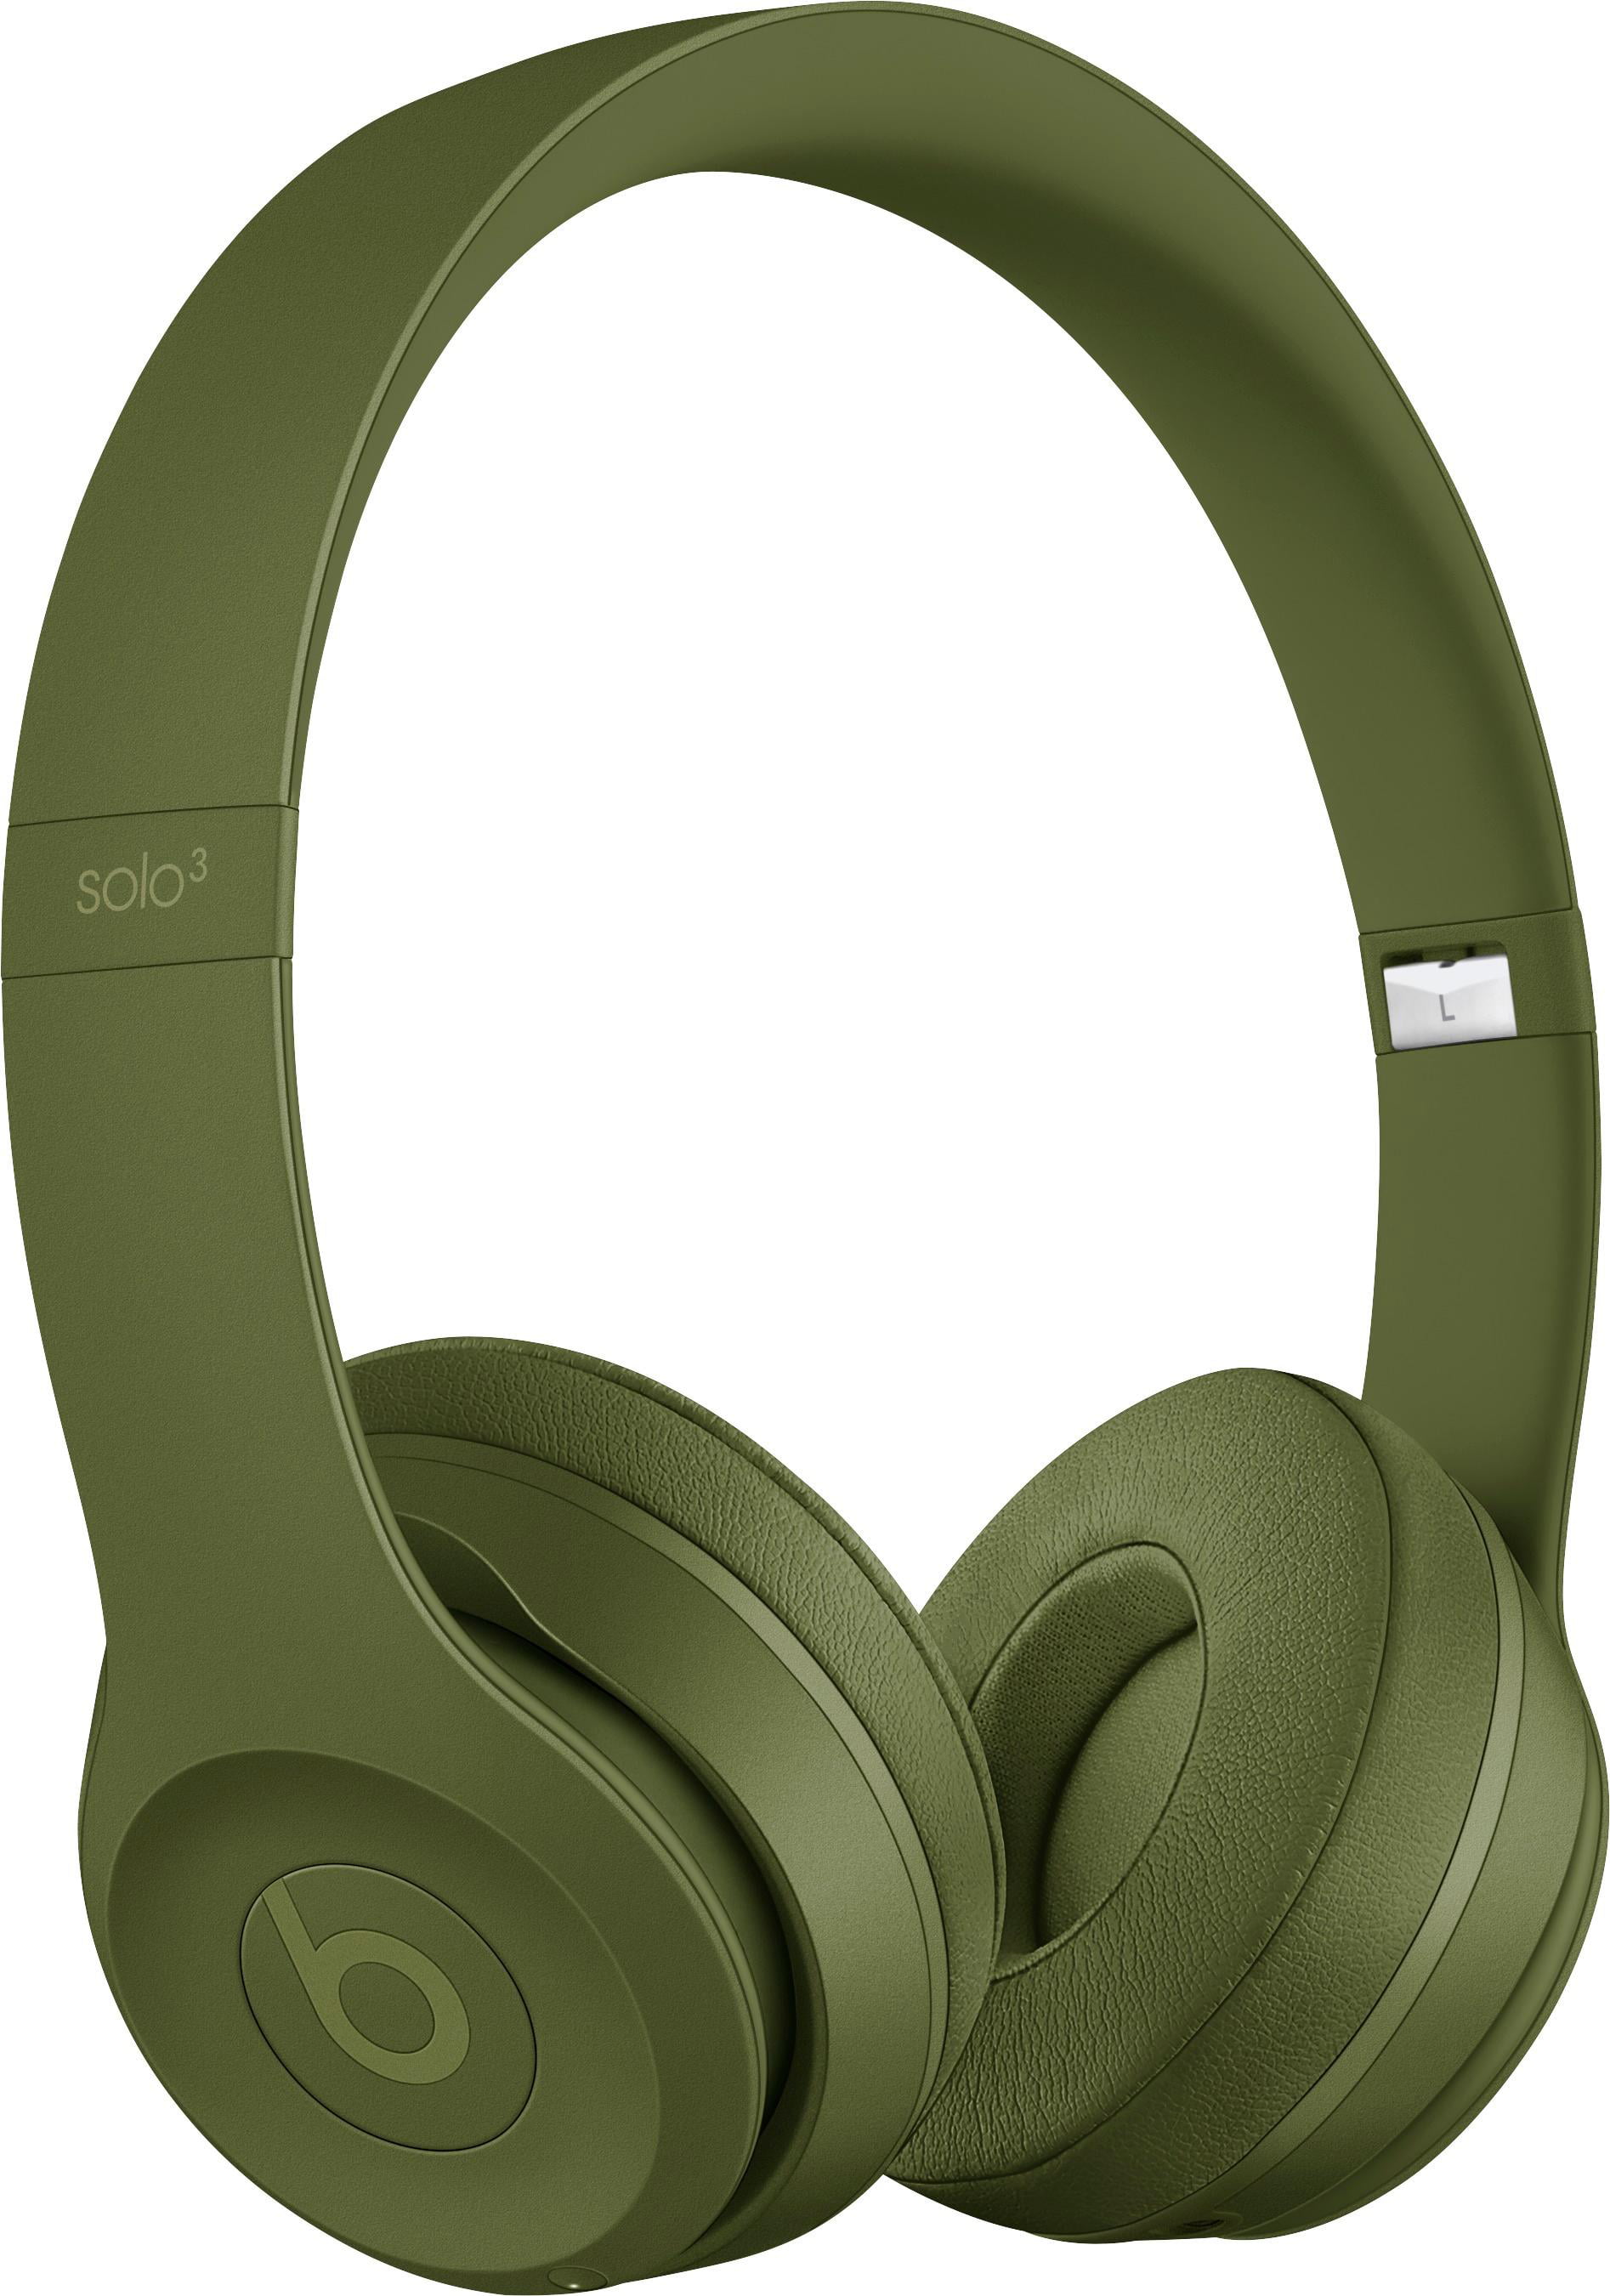 Beats by Dr. Dre Solo3 Wireless Headphones - Turf Green - Walmart.com